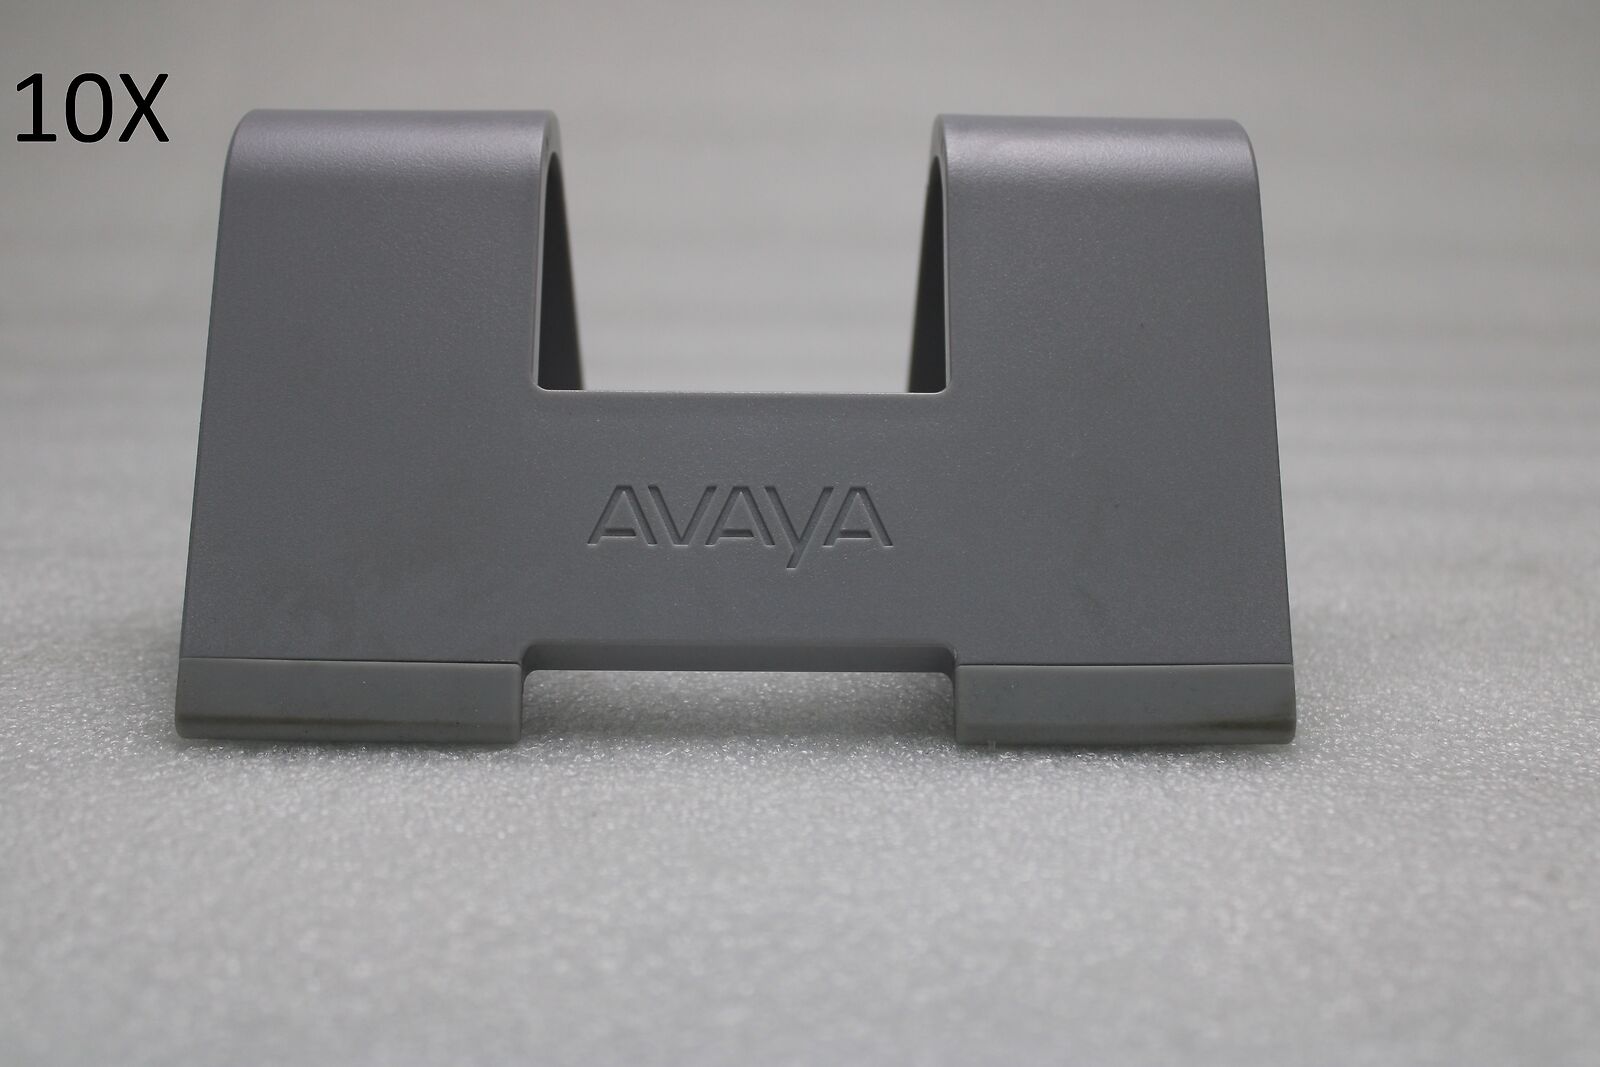 Lot of 10 AVAYA Desk Phone Stand - Part for 9408 9508 9608 9608G 9611G Models